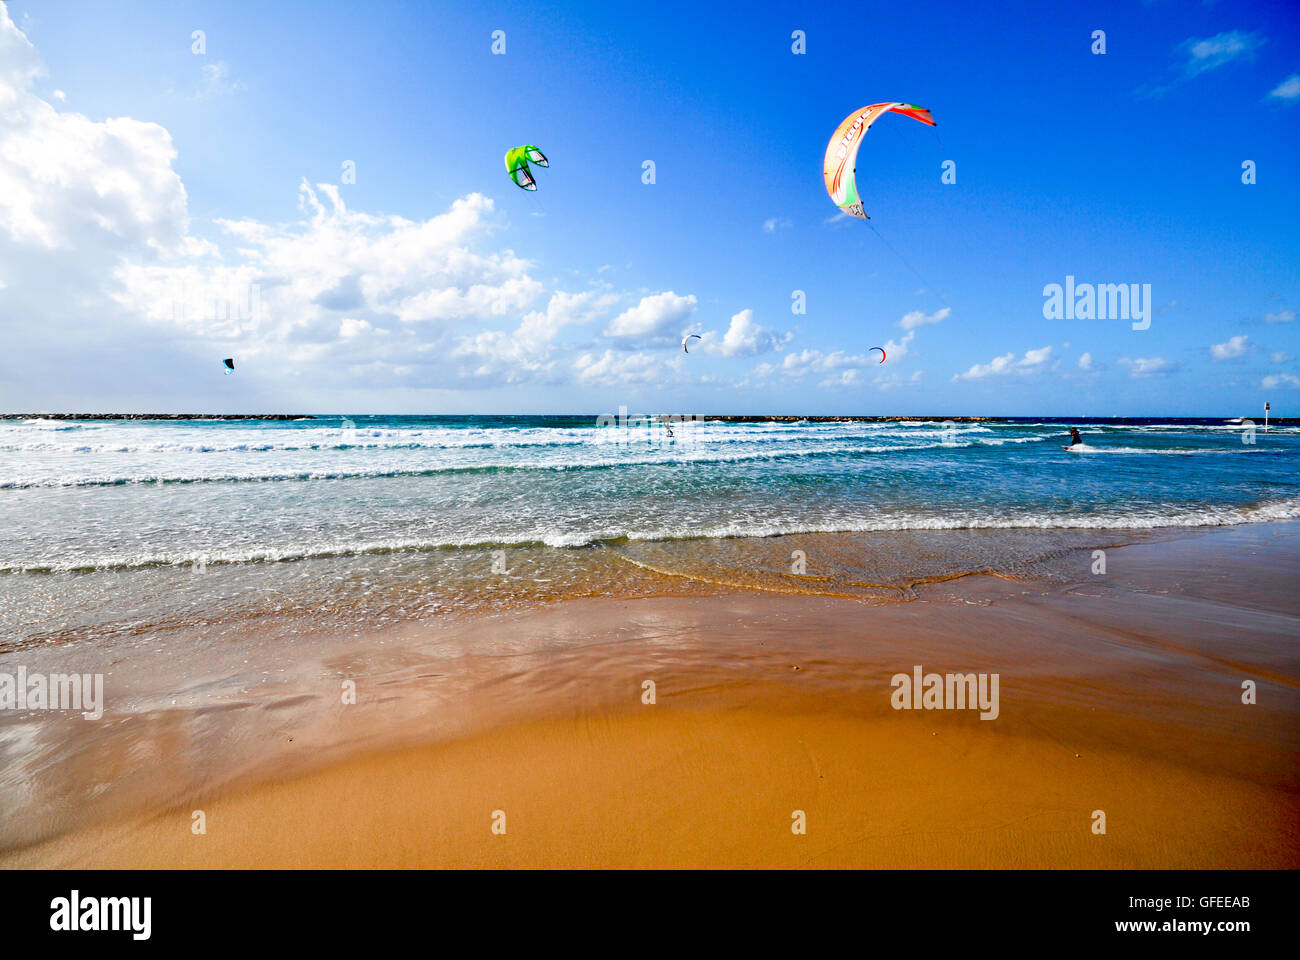 Kite surfing in the mediterranean sea Stock Photo